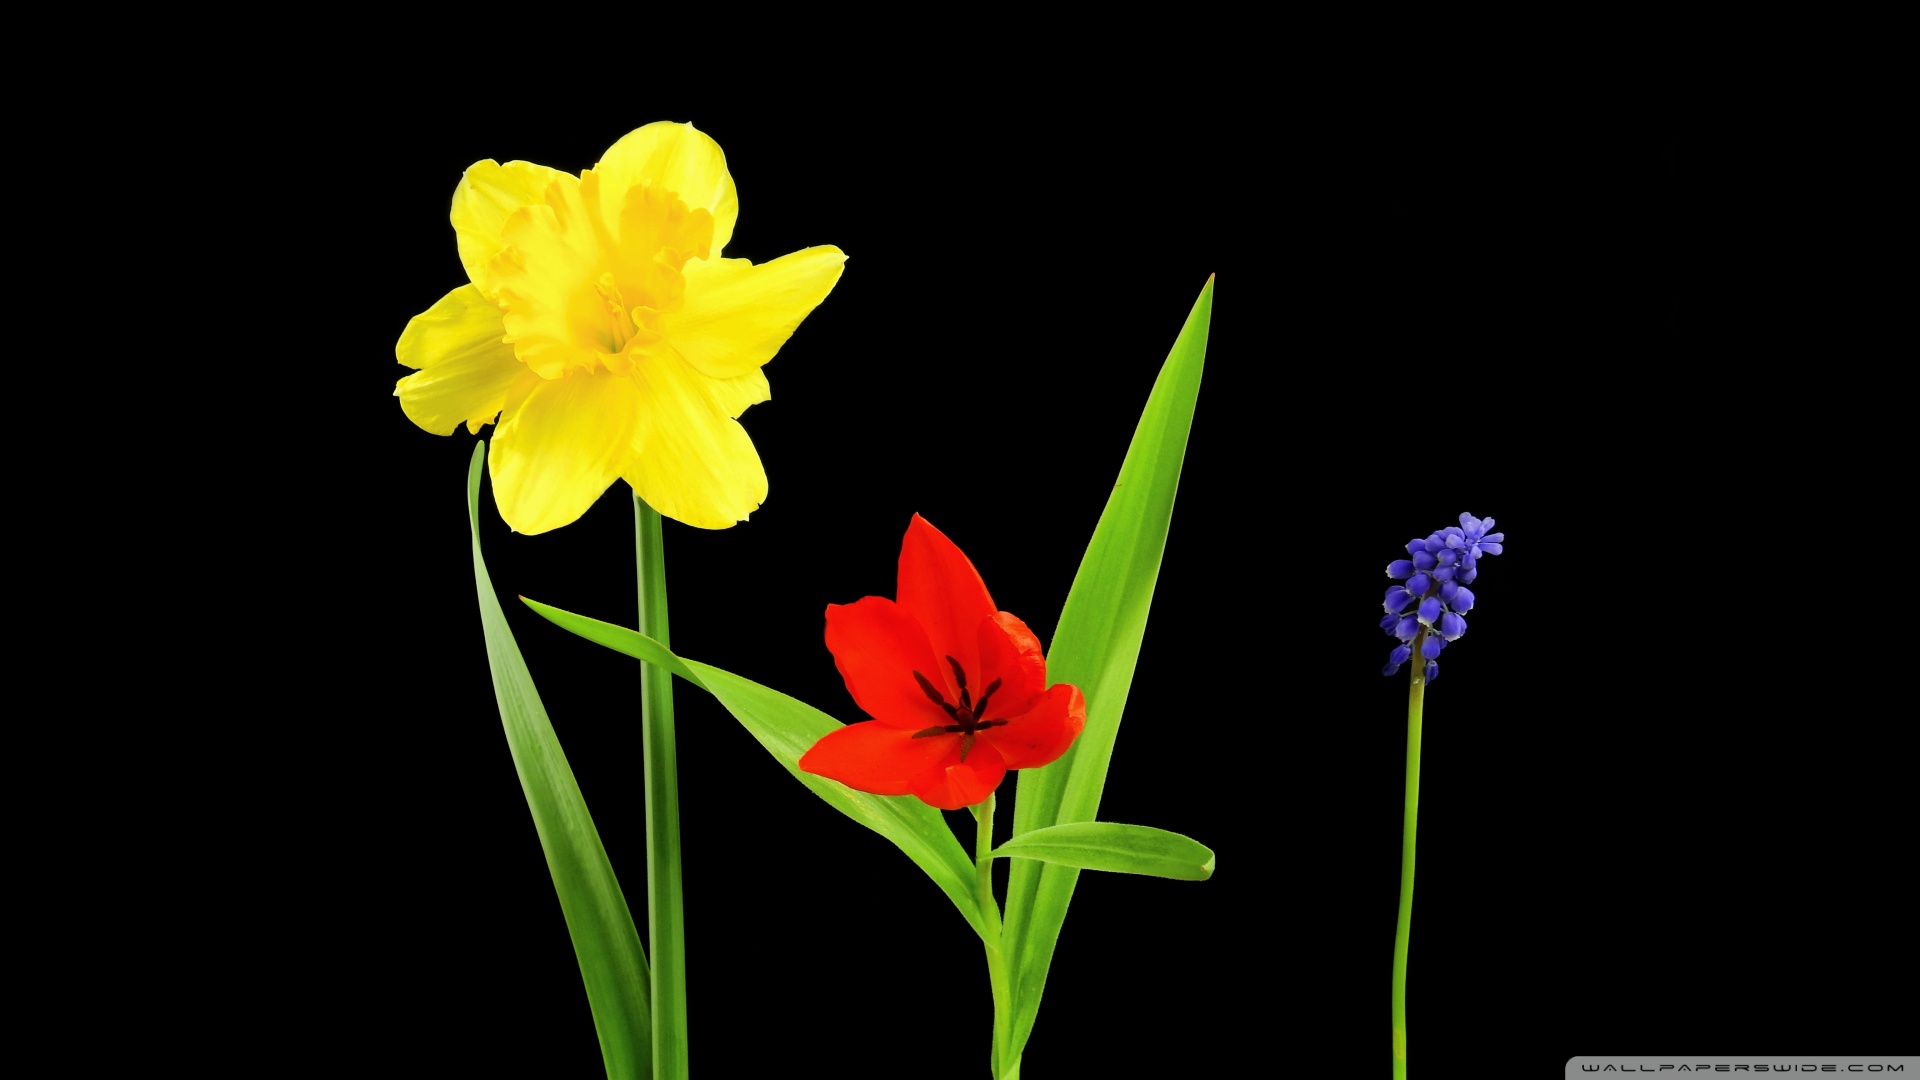 Spring Flowers, Daffodil, Tulip, Muscari, Black Background Ultra HD Wallpaper for 4K UHD Widescreen desktop, tablet & smartphone